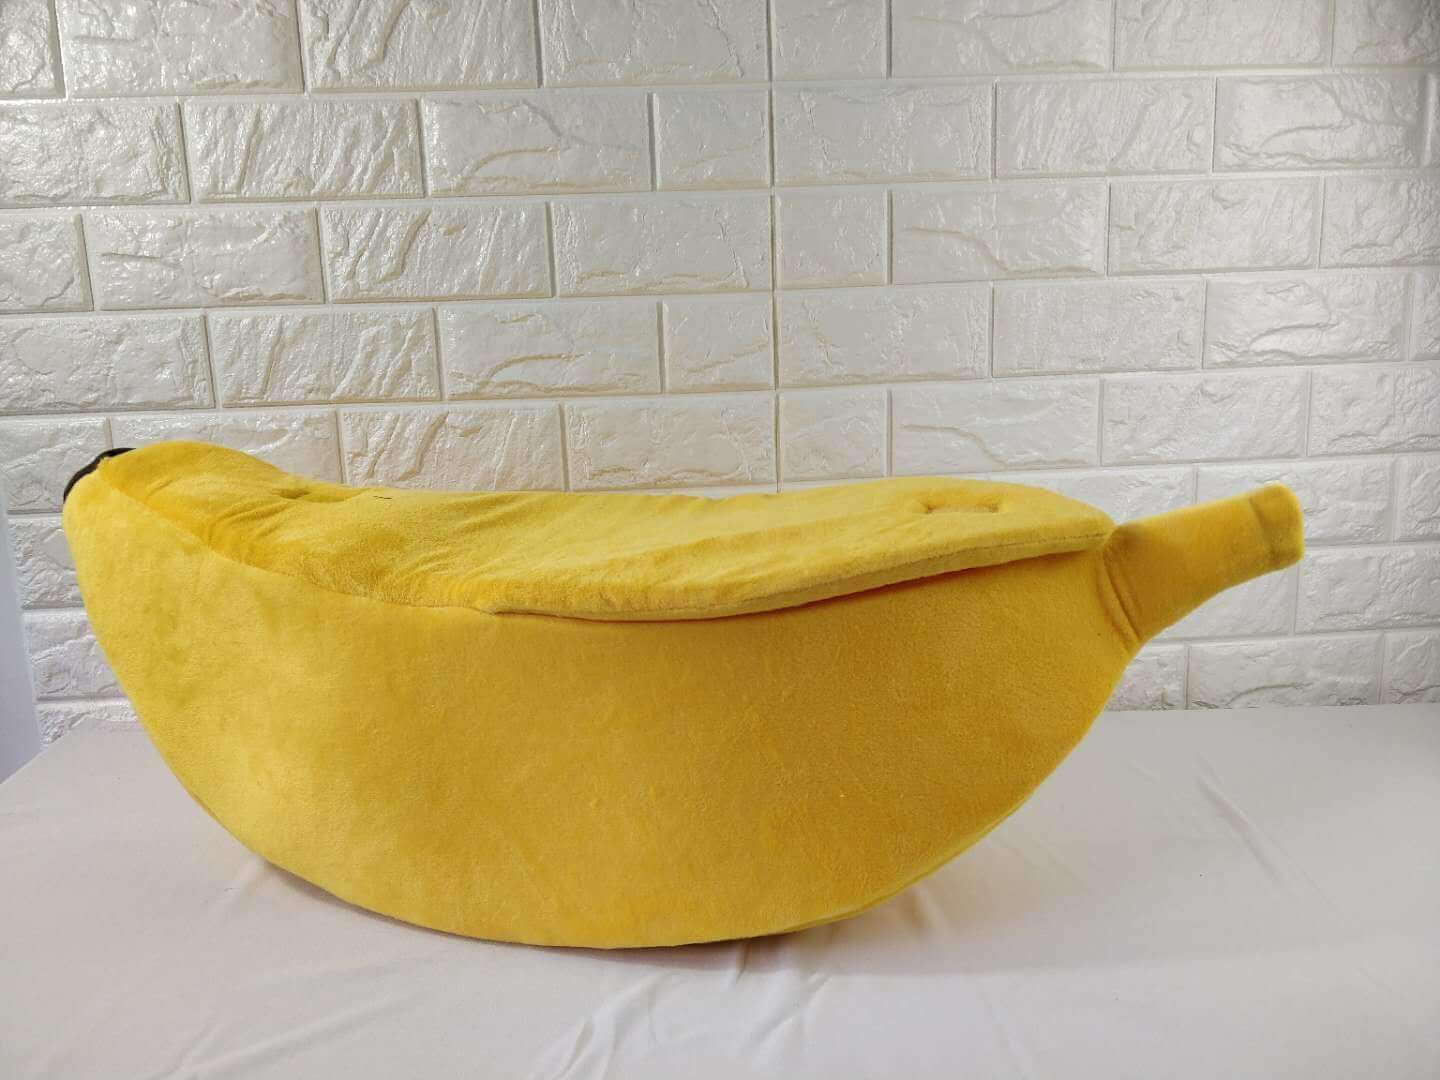 Banana Bed Happy Paws 